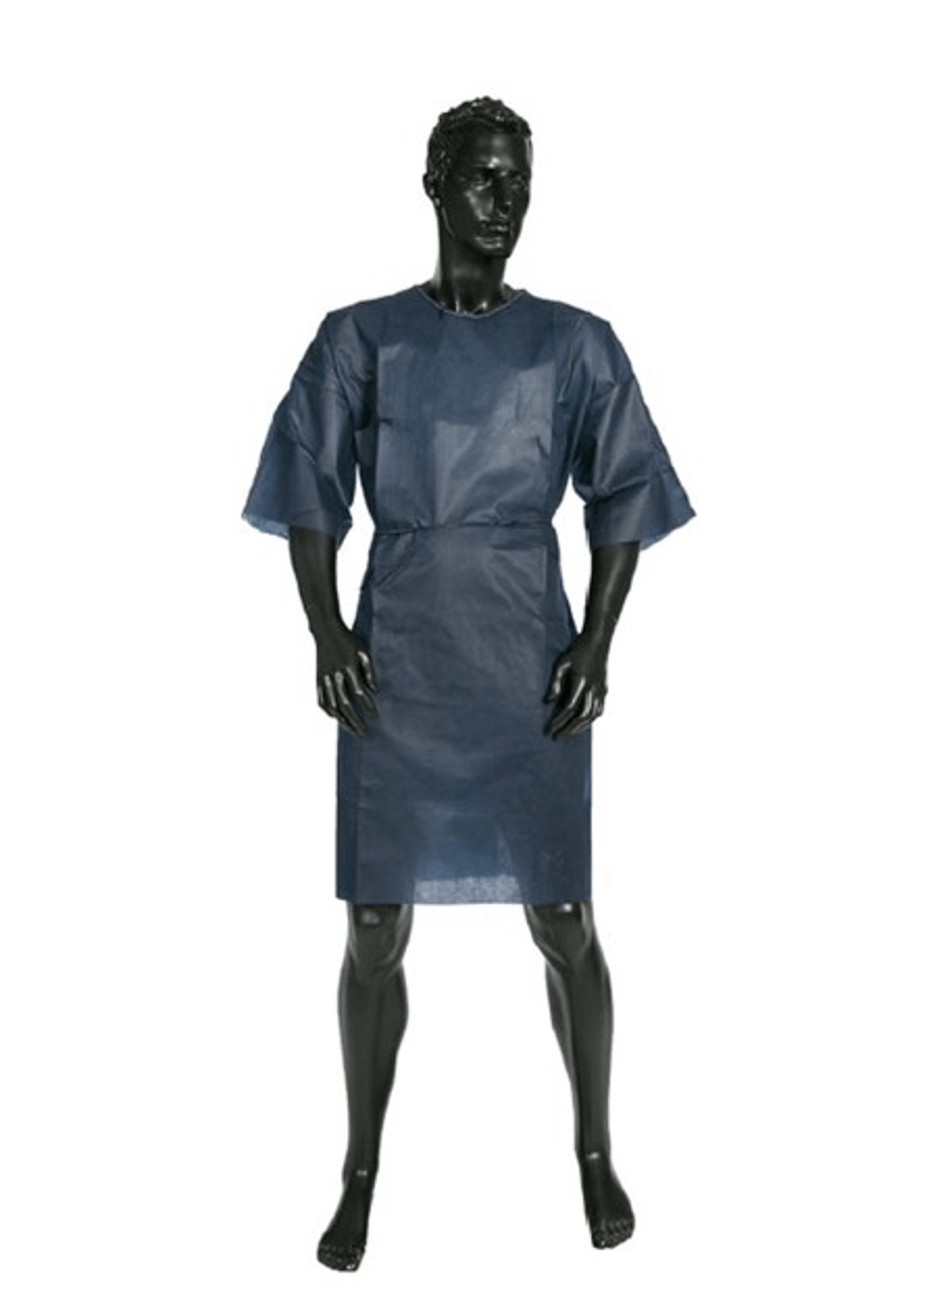 non-woven disposable short sleeve patient gowns